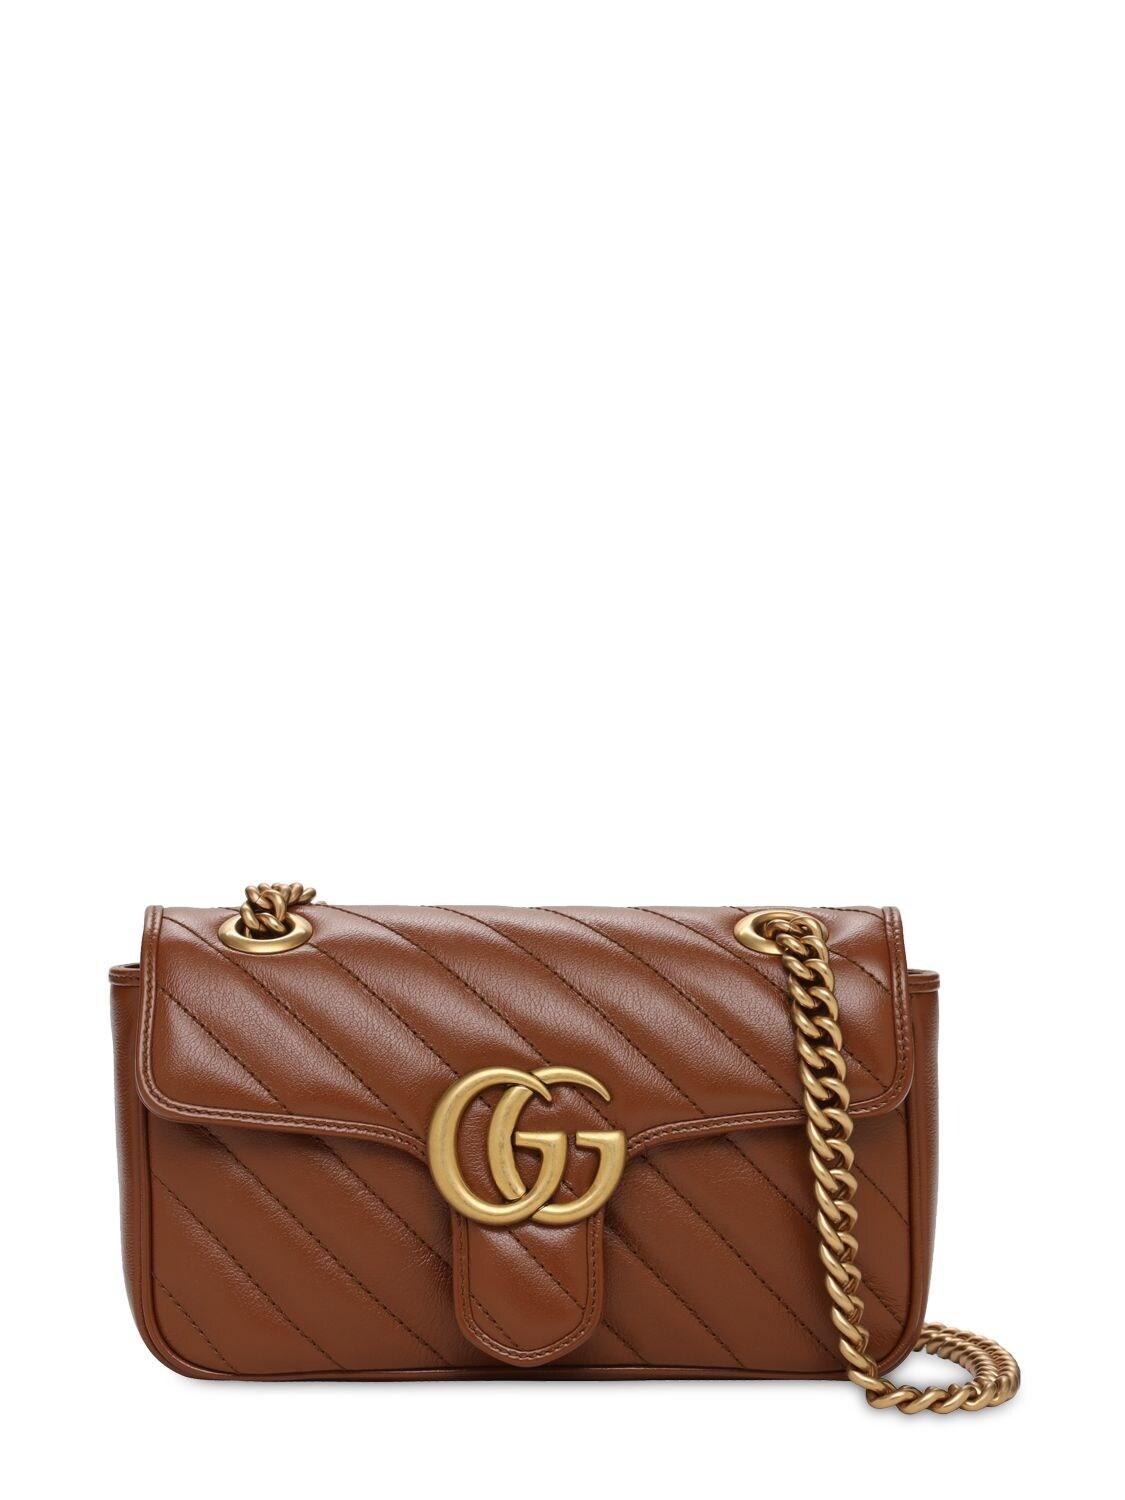 Gucci Leather GG Marmont Mini Matelassé Shoulder Bag in Brown | Lyst